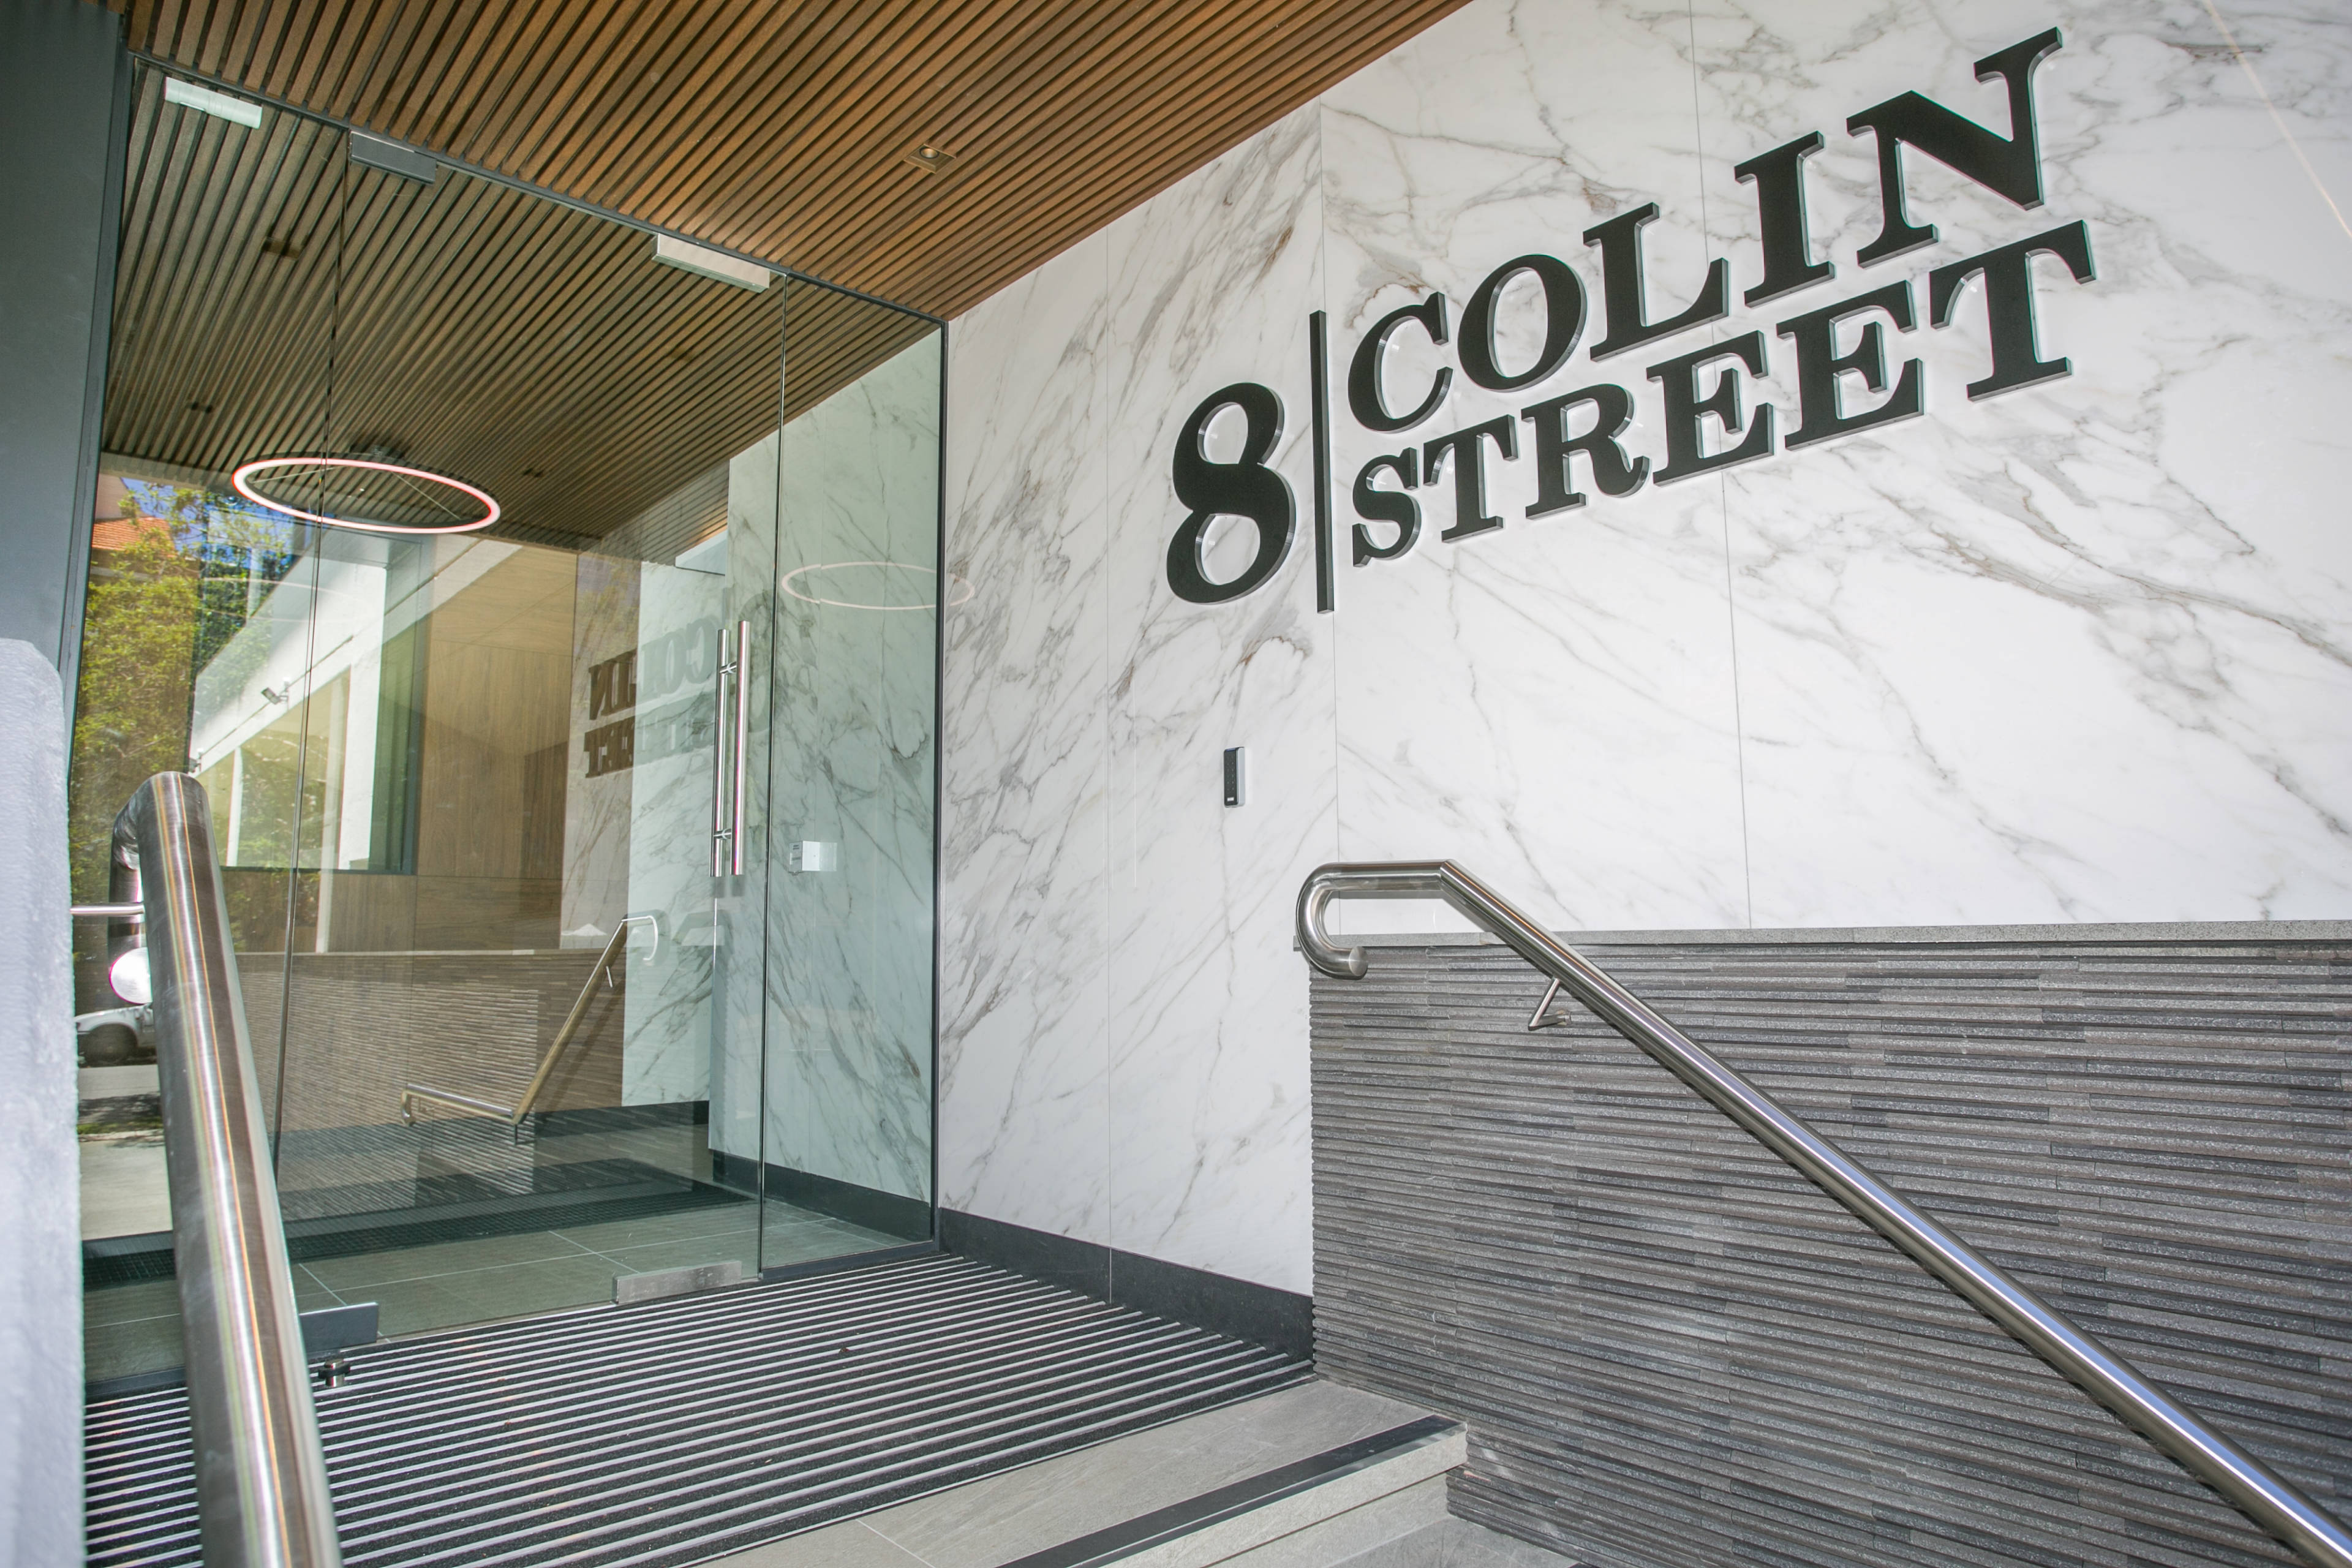 8 Colin Street